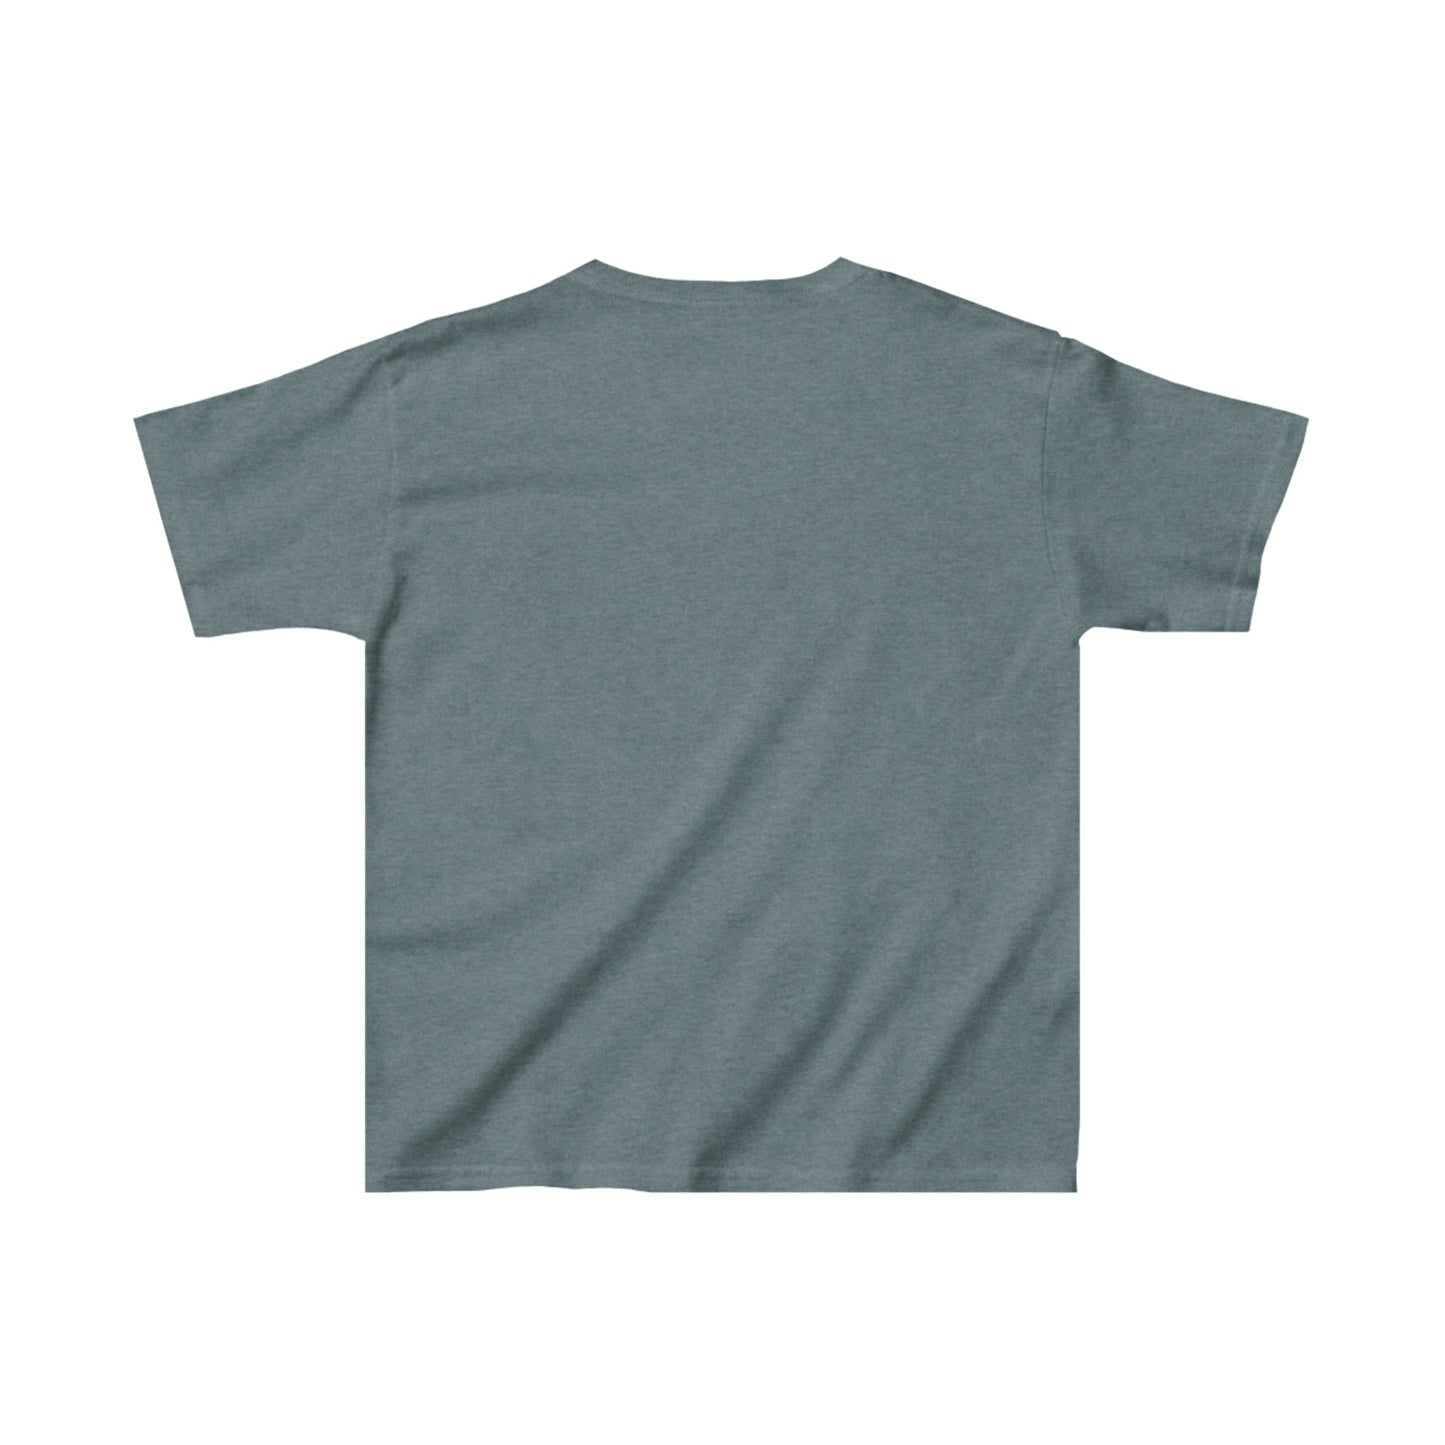 Kids Be Kind Short Sleeve Cotton T-Shirt - numonet